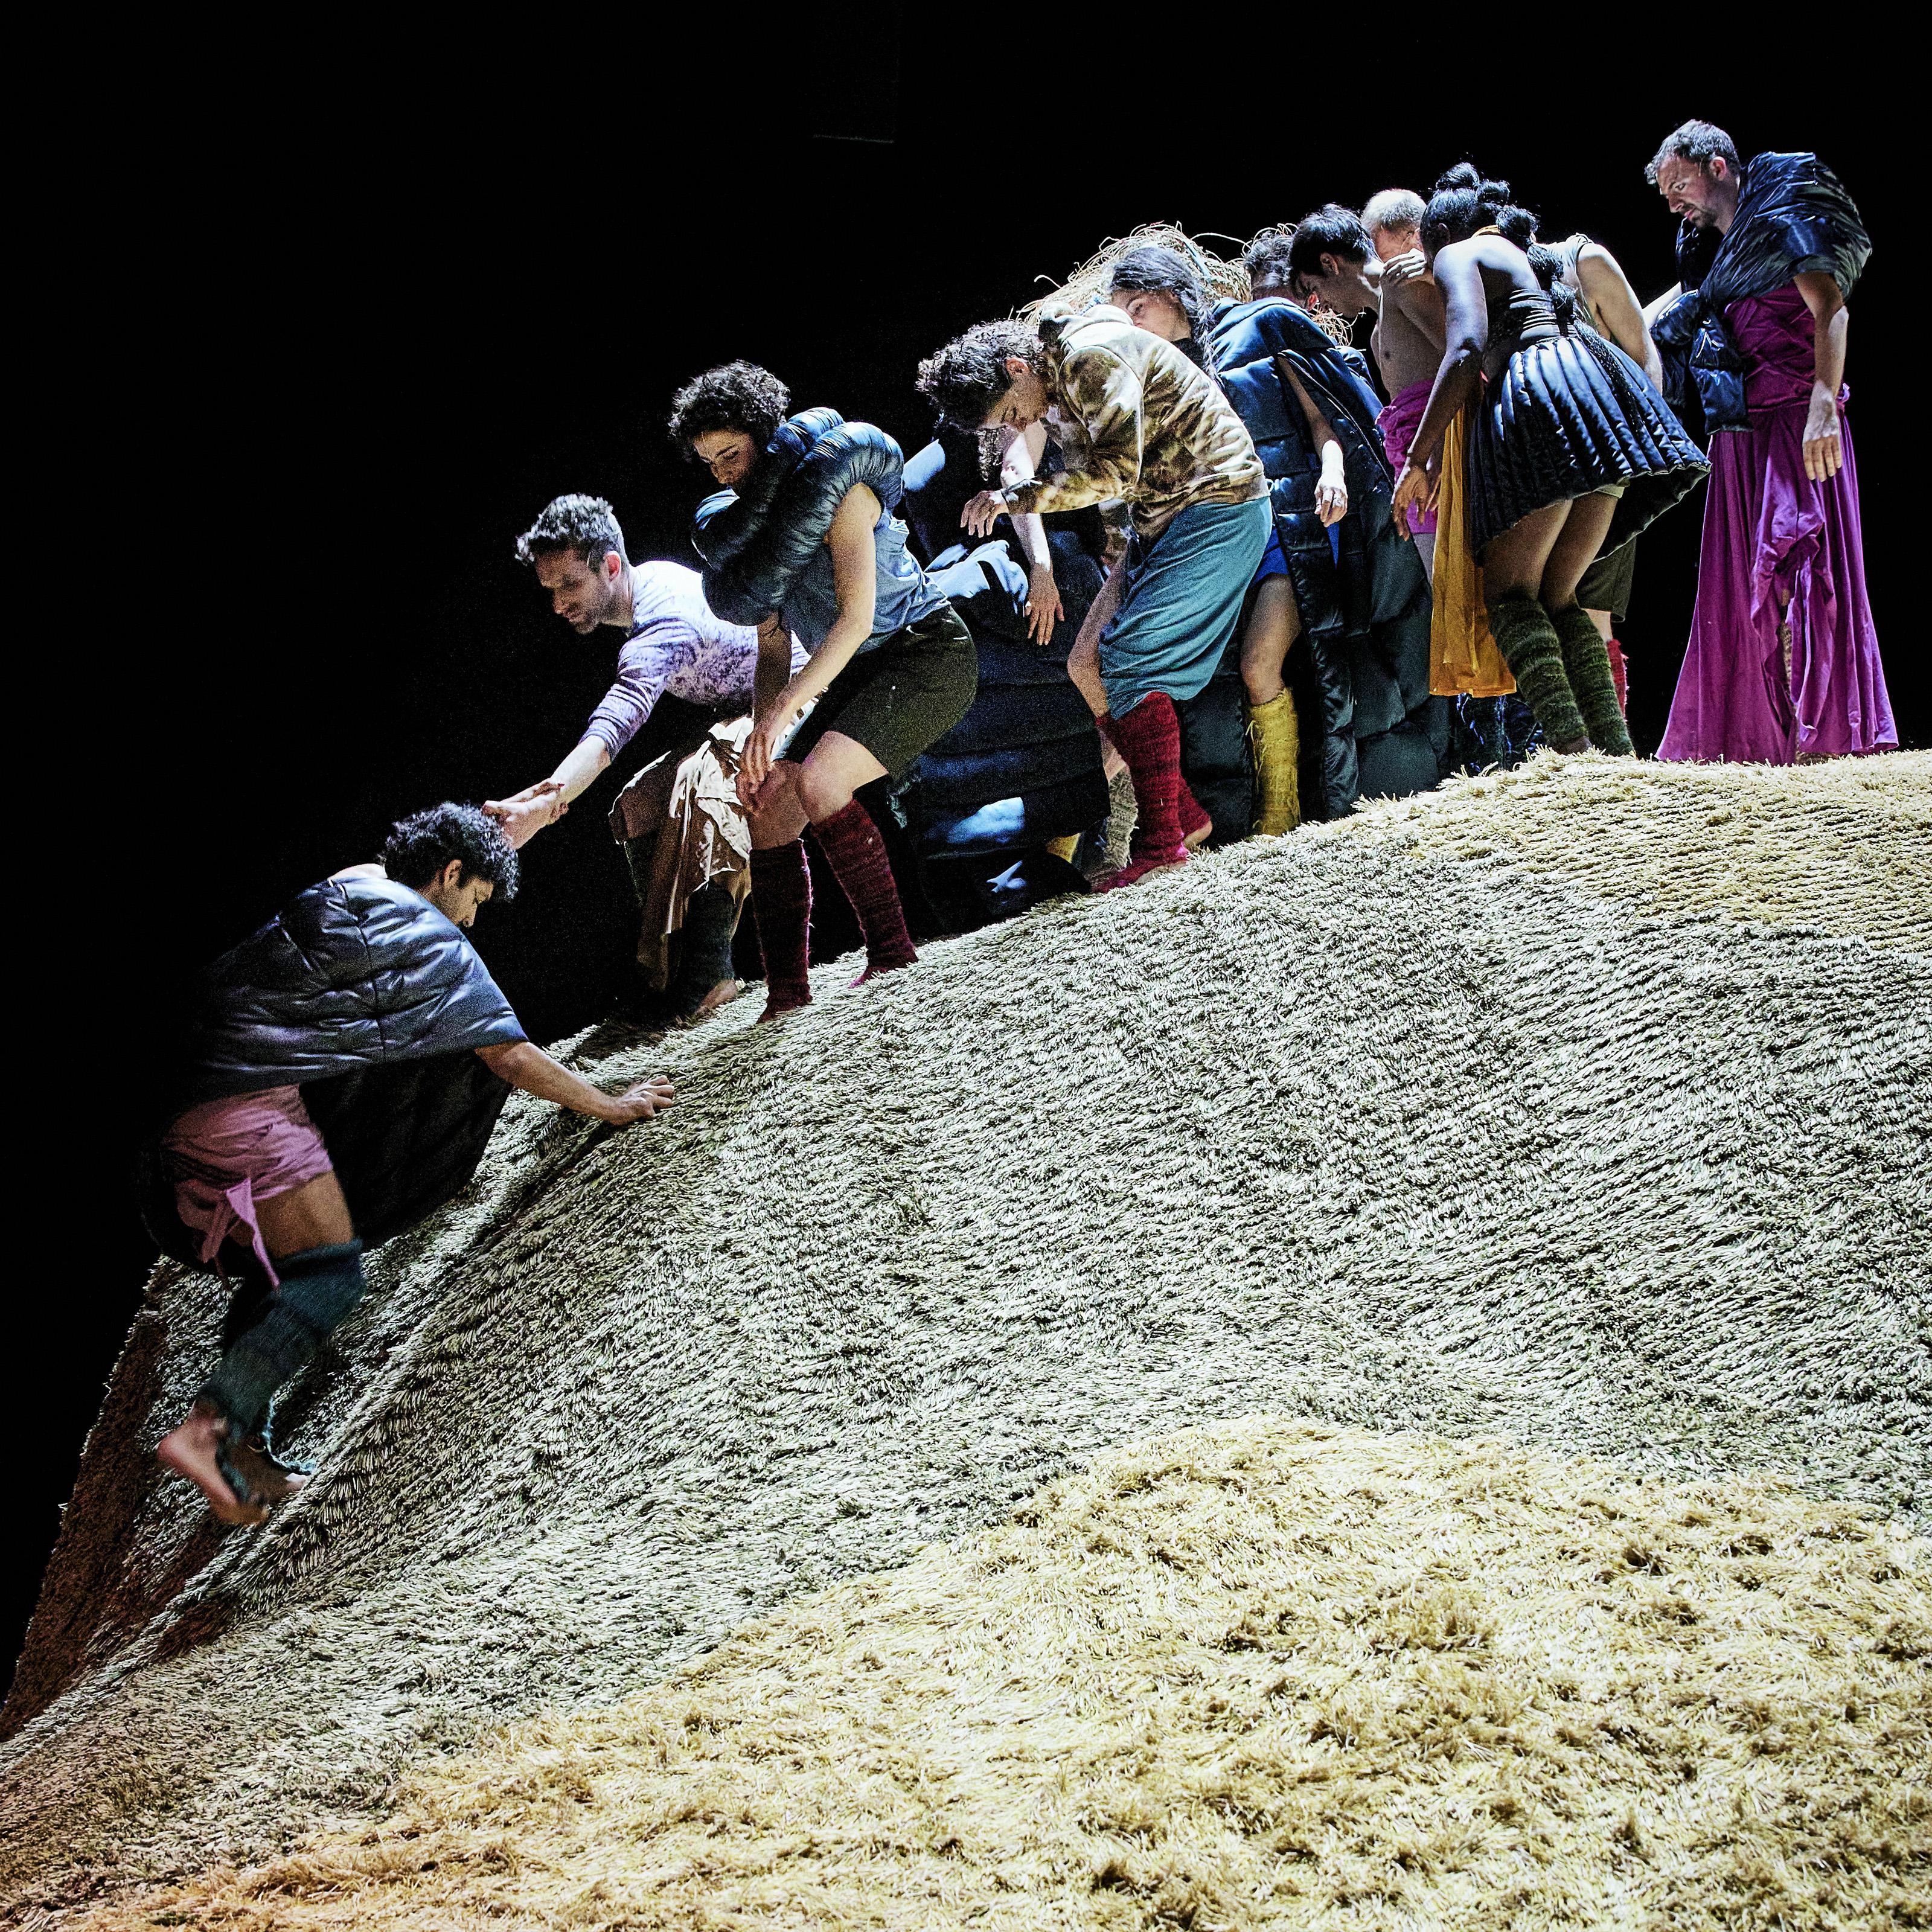 Dancers climbing on a mound